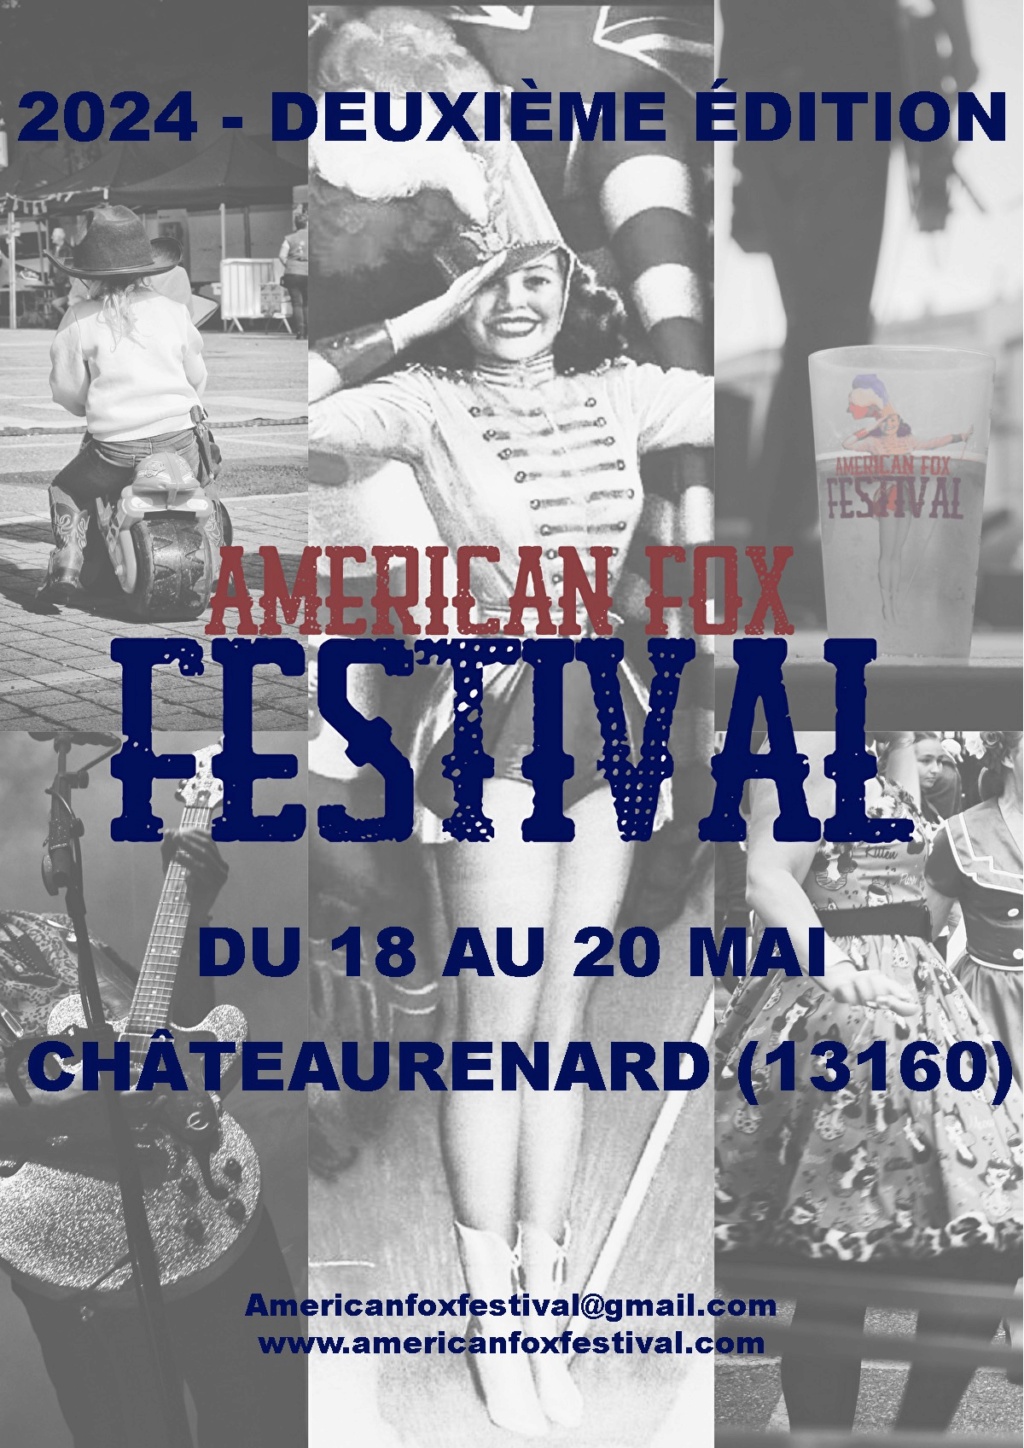 MANIFESTATION - Américan Fox Festival - 18 au 20 Mai 2024 - Châteaurenard (13160) 65fddc10